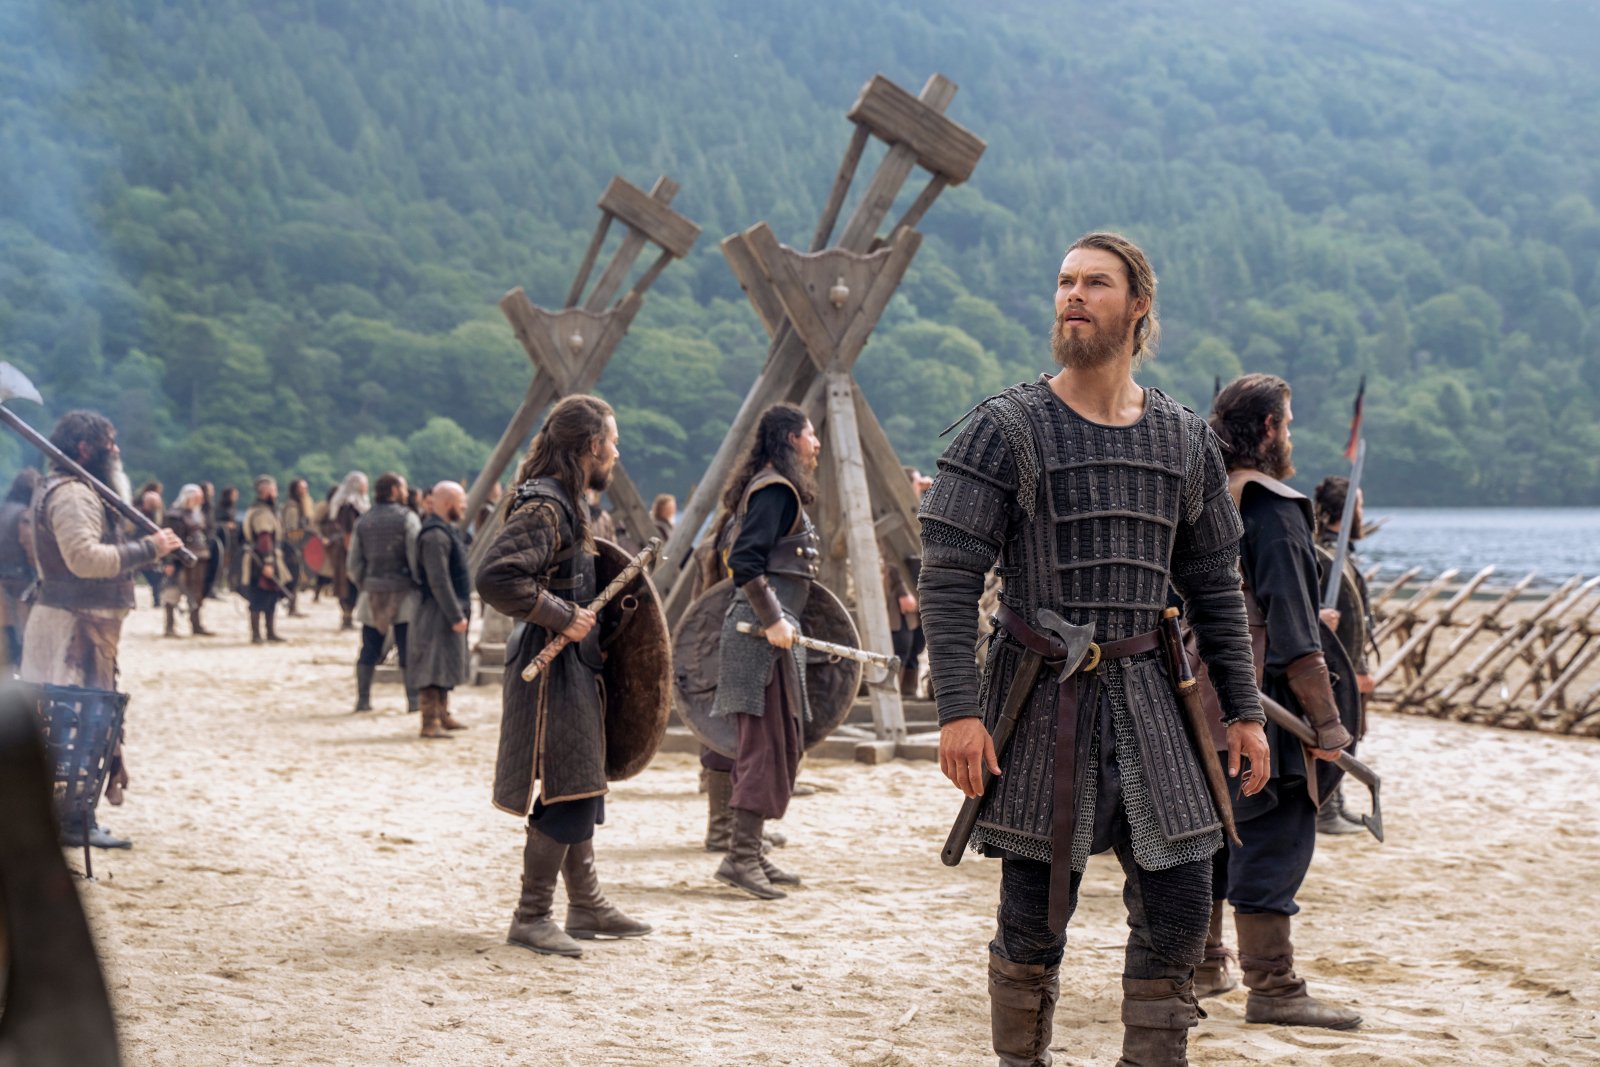 Vikings: Valhalla season 1 - who is King Canute?